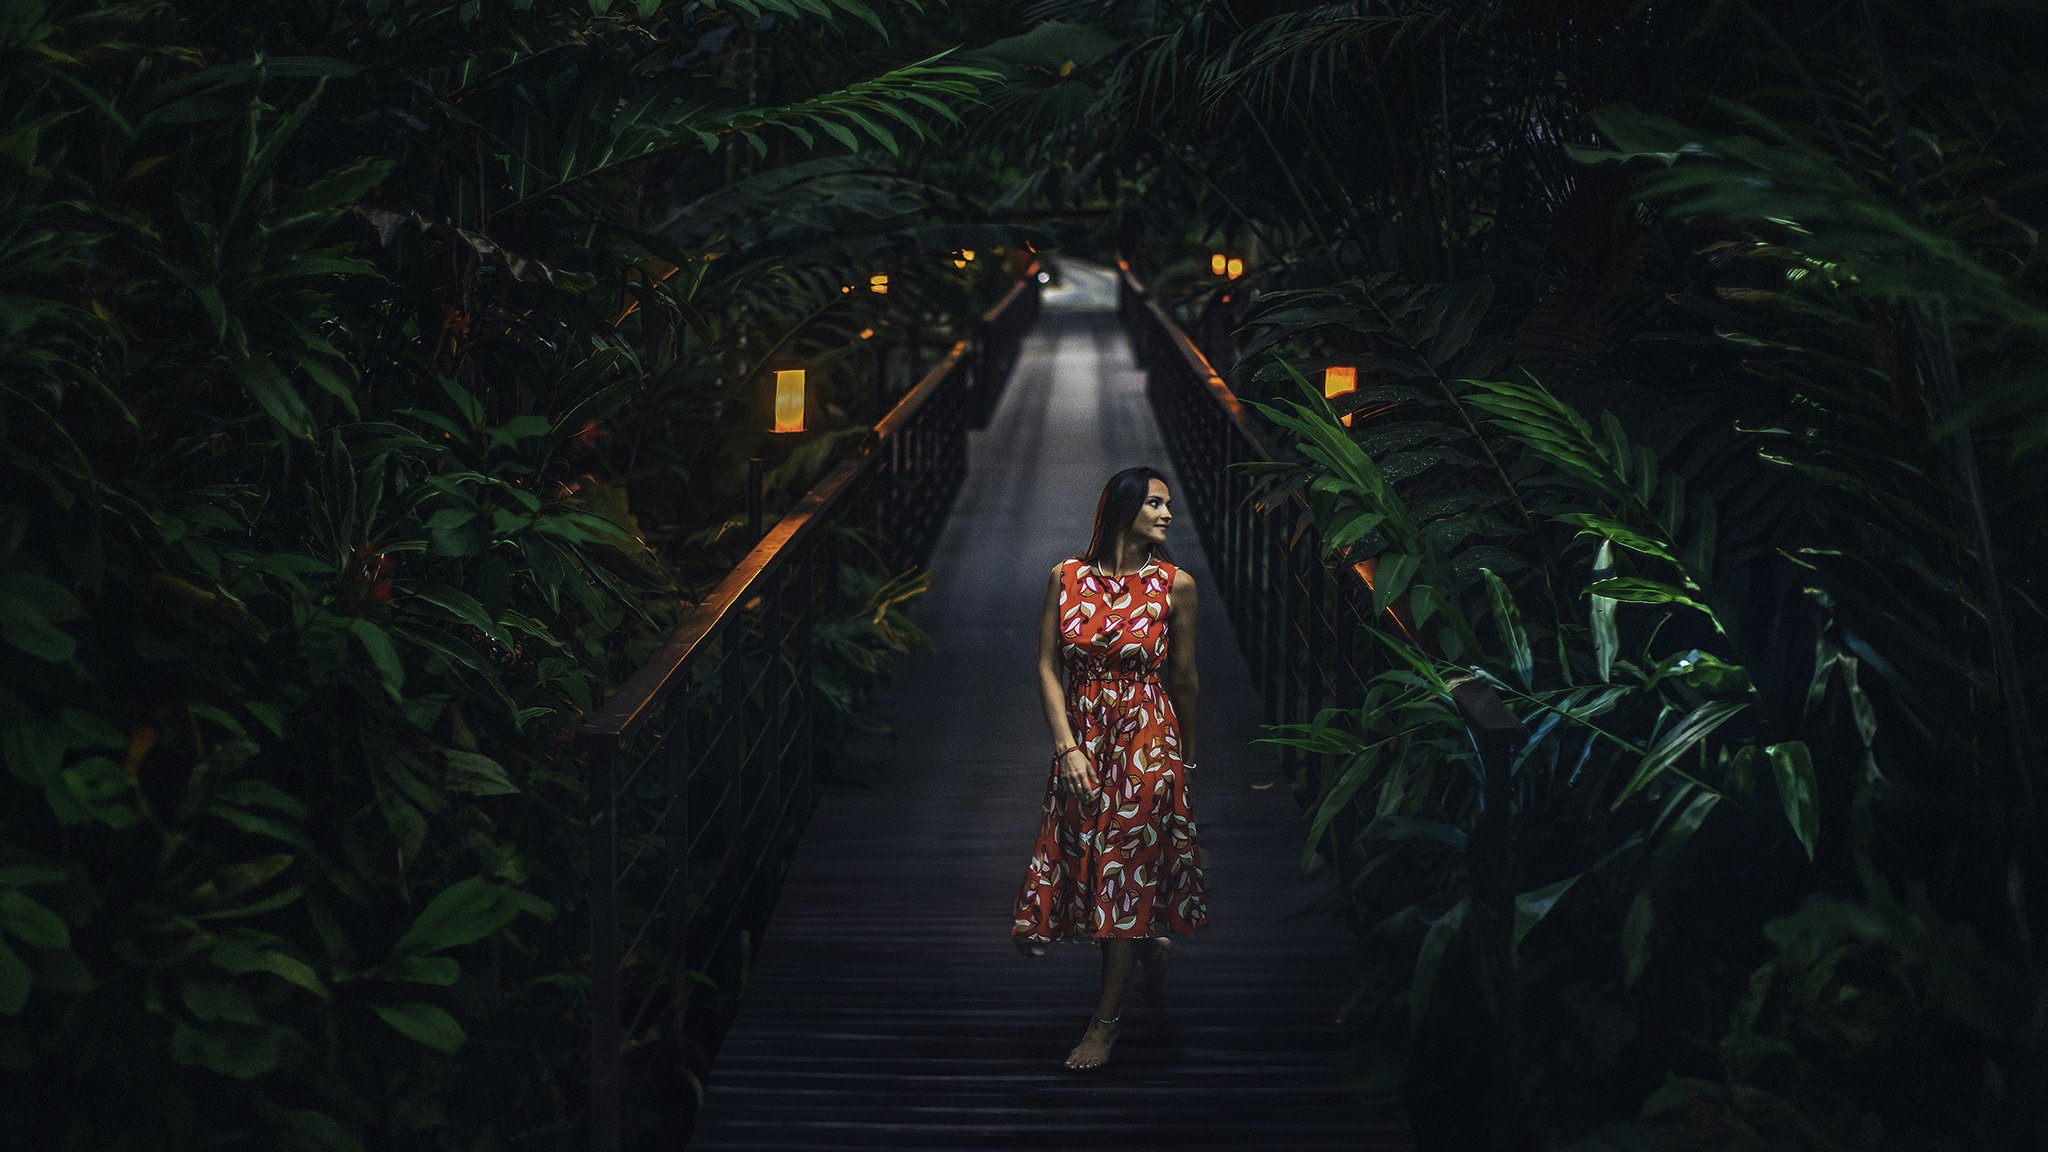 4O1A9146 - Nayara Gardens - Dinara on the Bridge in Red Dress by Brice Ferre Studio.jpg